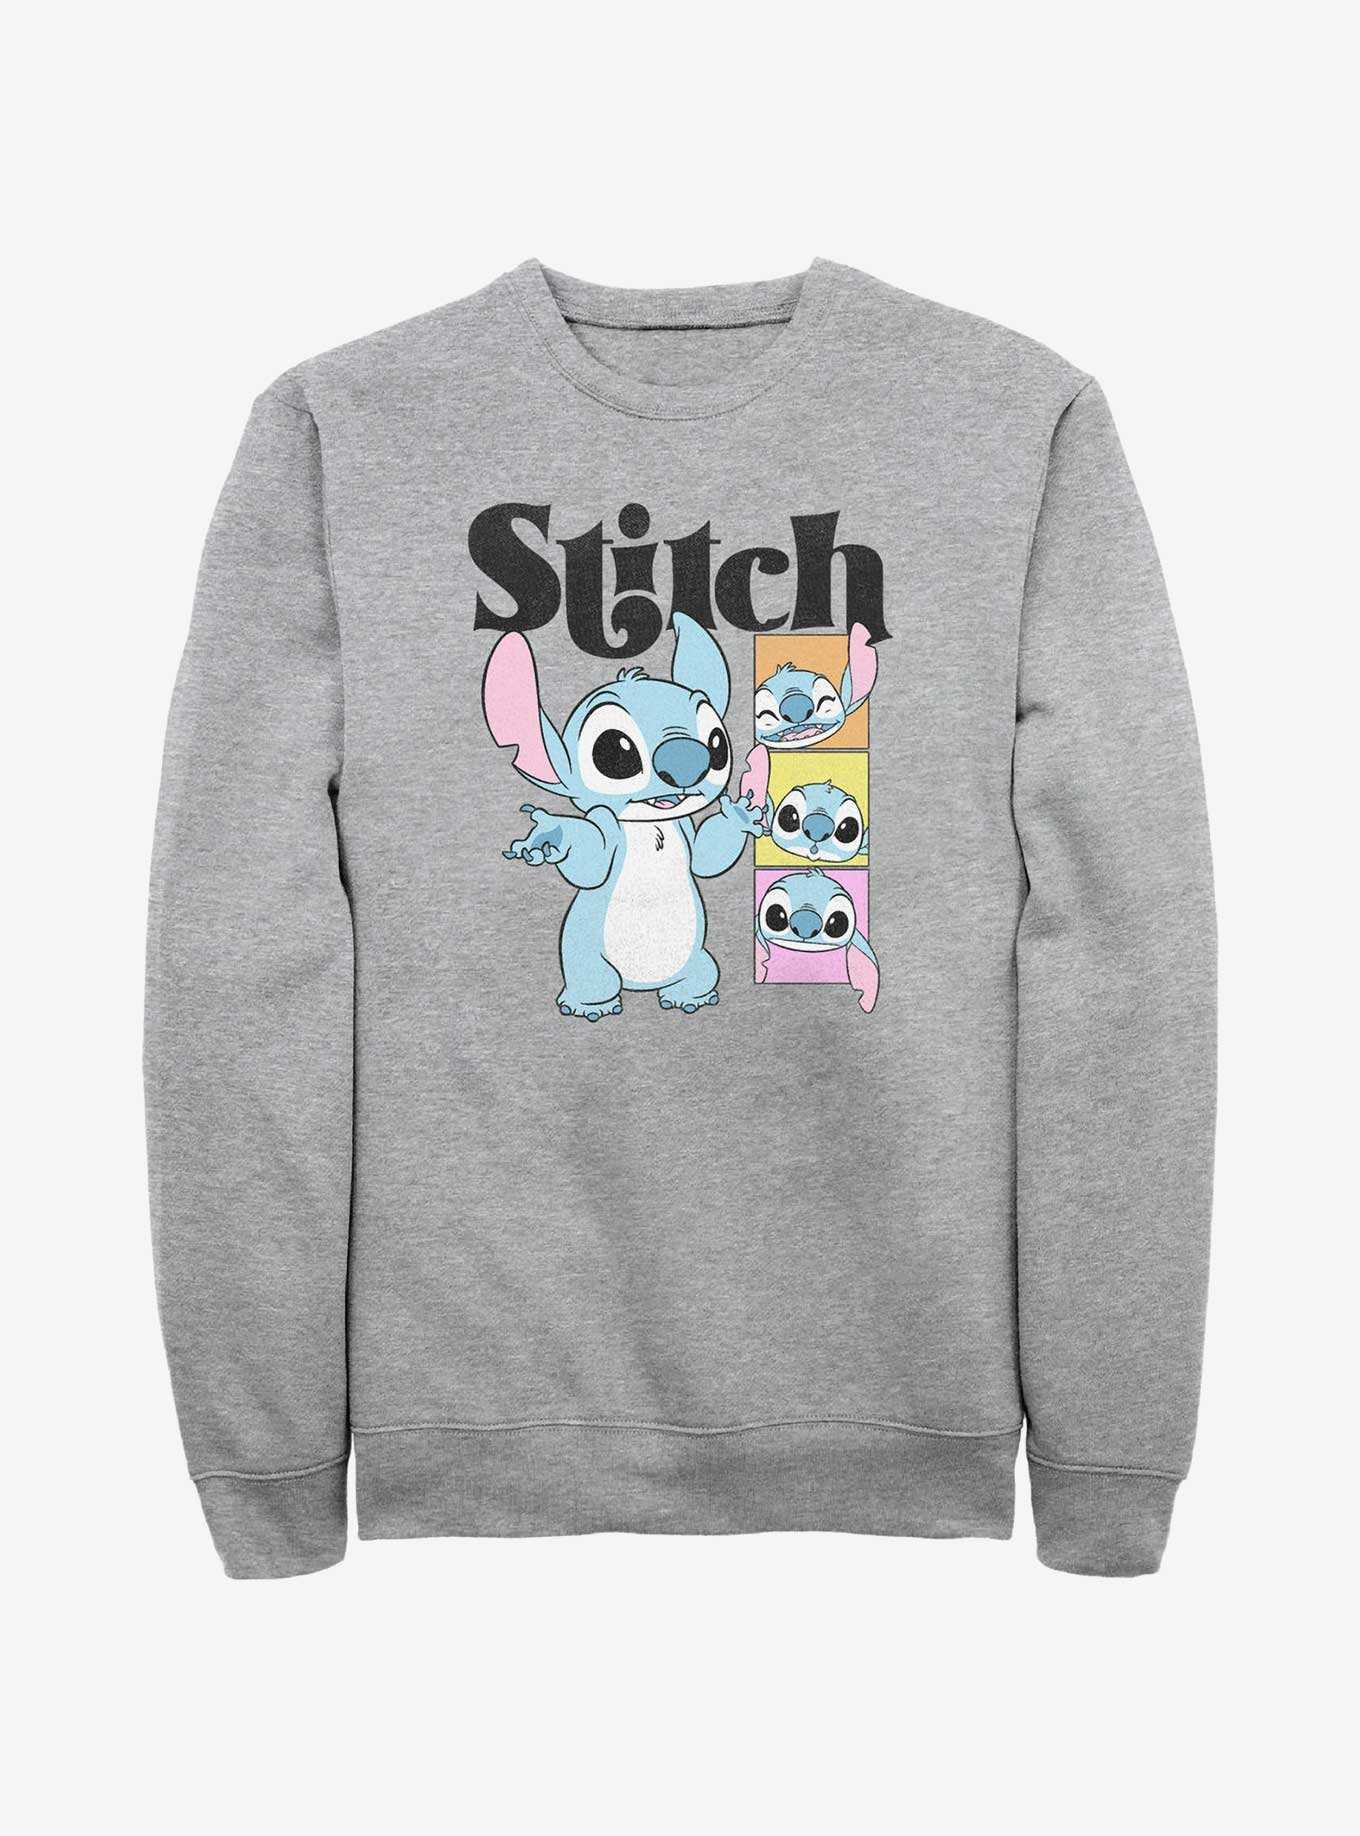 Primark Disney Exclusive Lilo And Stitch Pullover Sweatshirt Hoodie Size 2XL